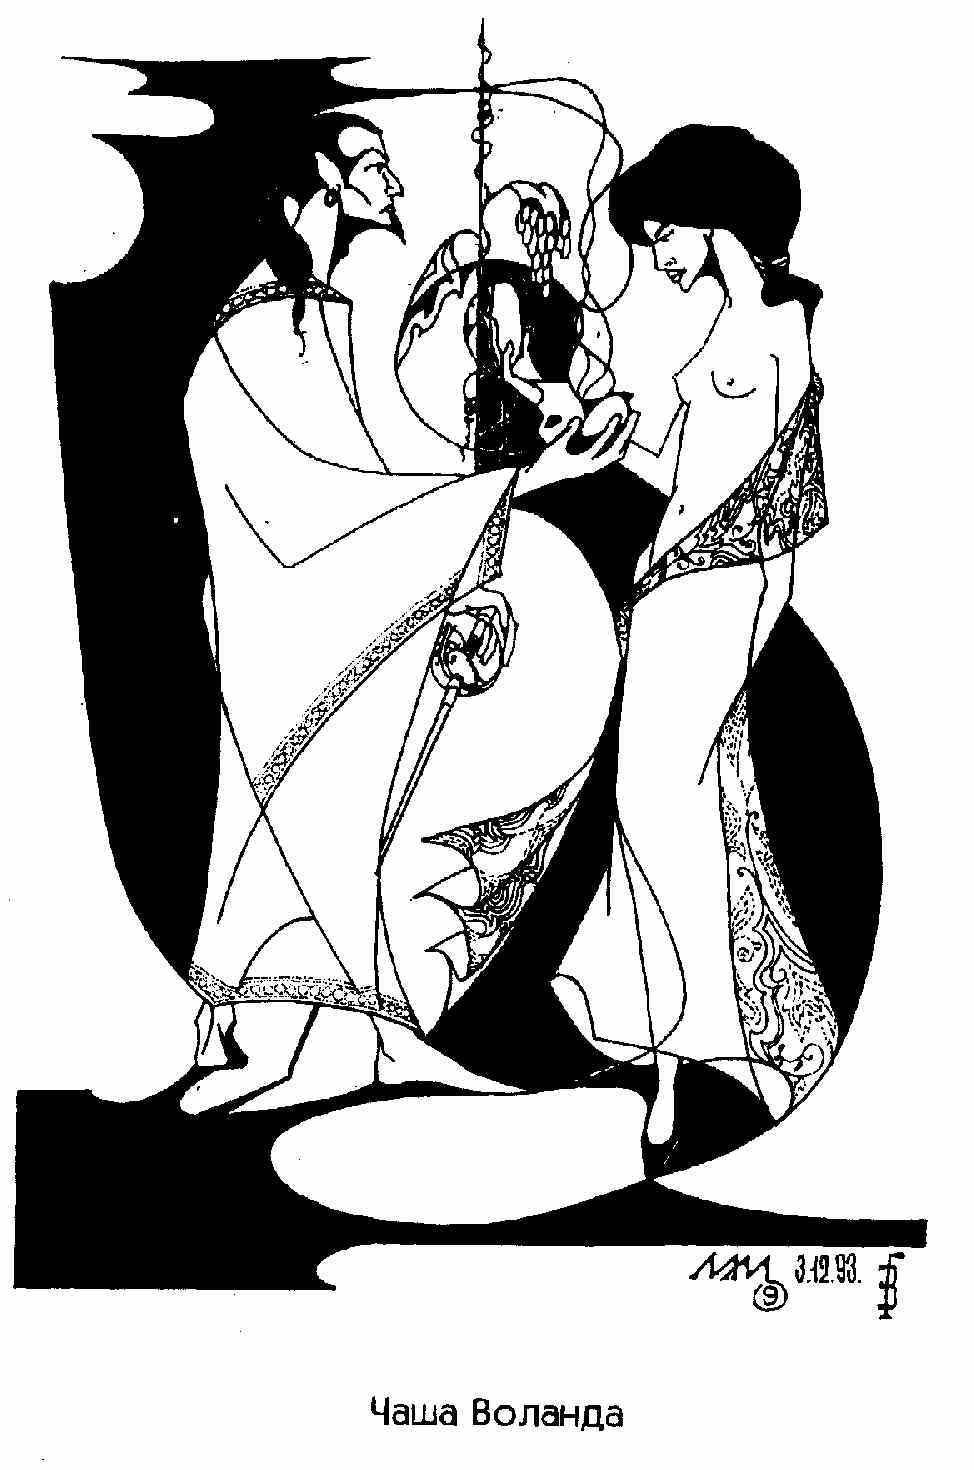 Иллюстрация Евгения Глотова к «Мастеру и Маргарите»